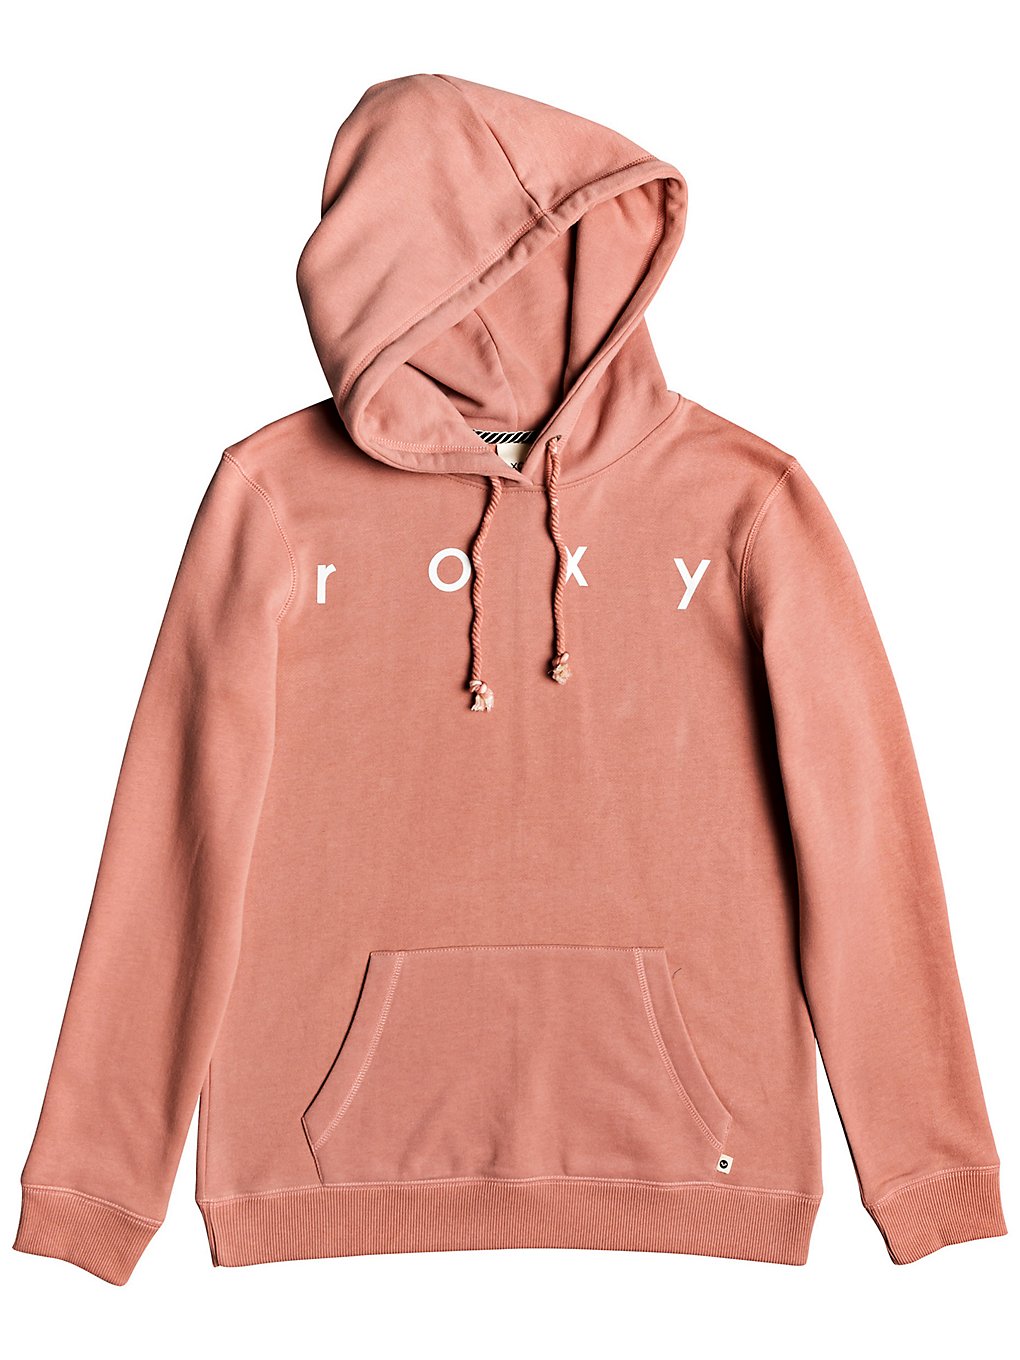 Roxy eternally yours hoodie pinkki, roxy